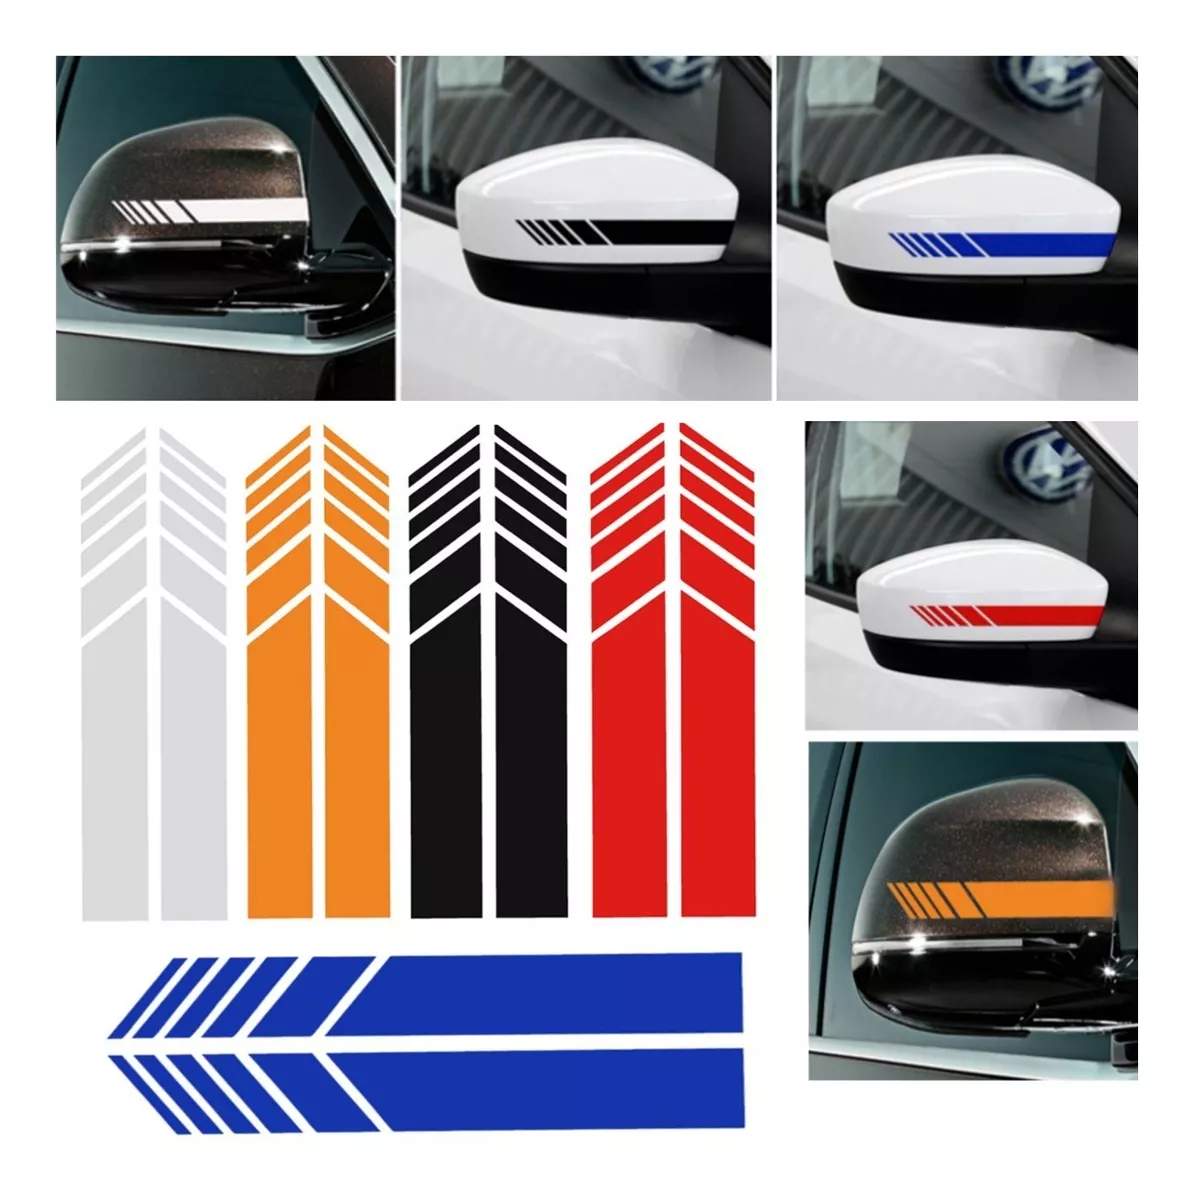 Tercera imagen para búsqueda de stickers para autos